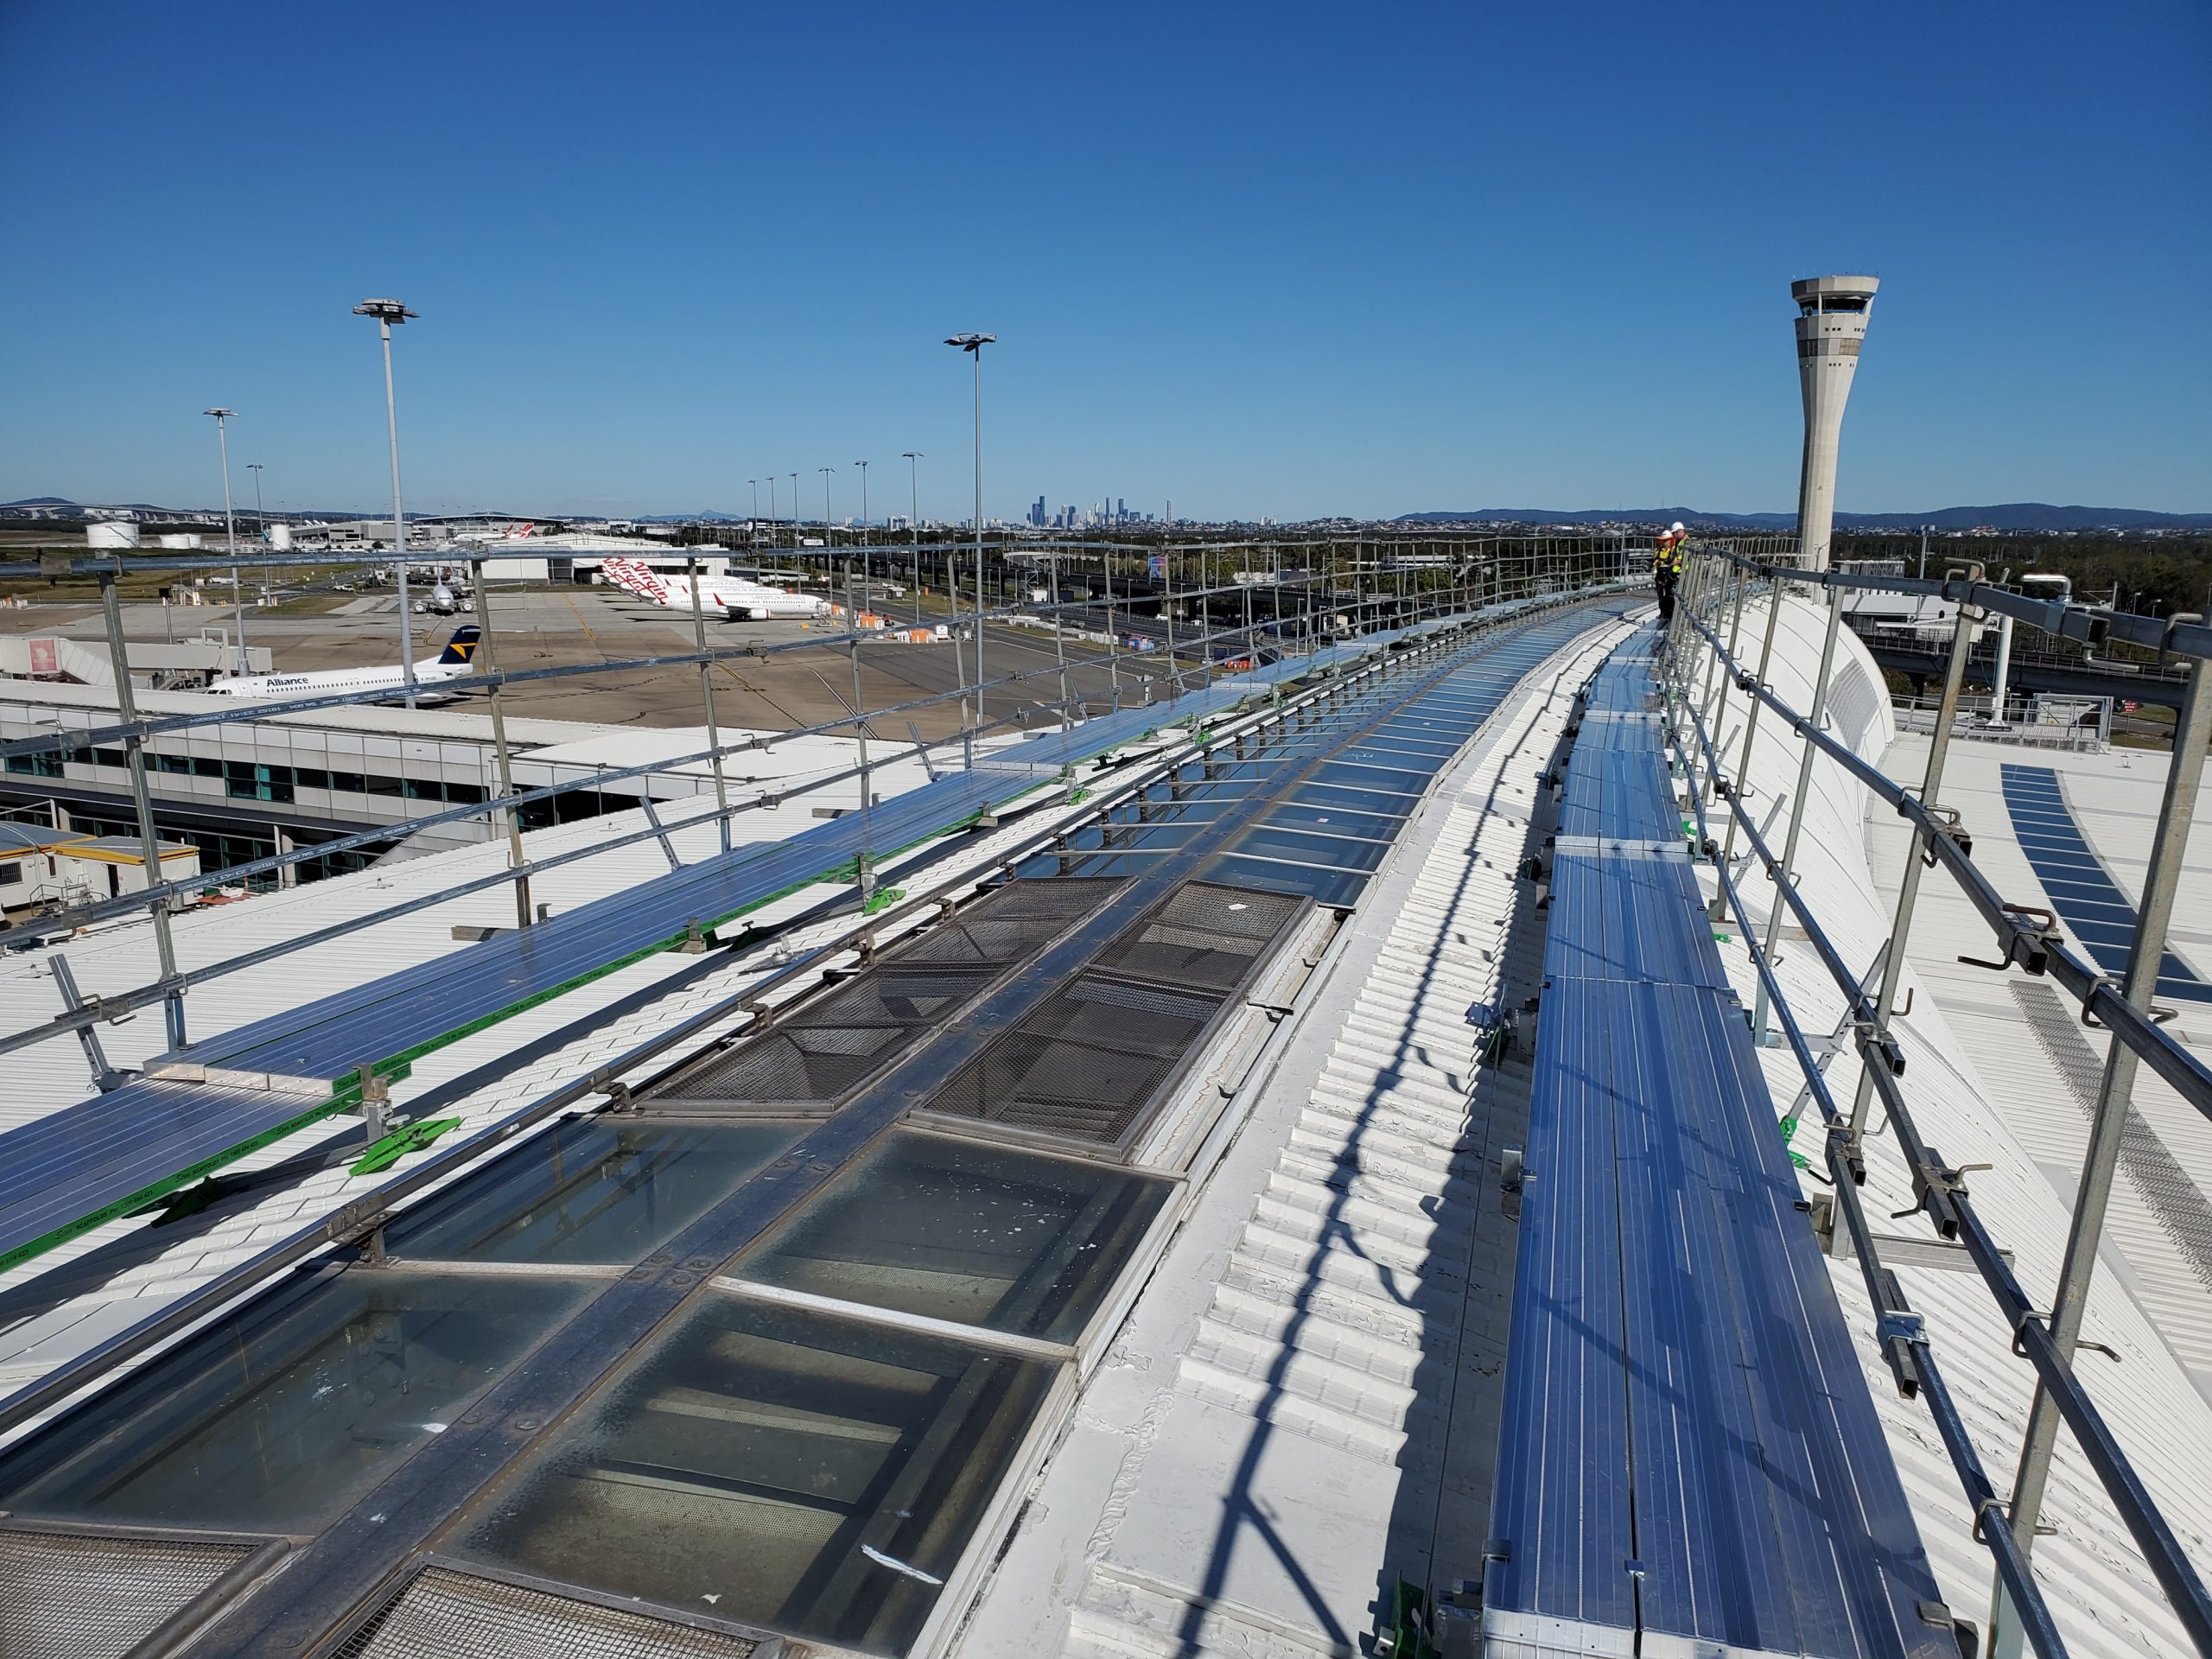 brisbane airport roof under construction